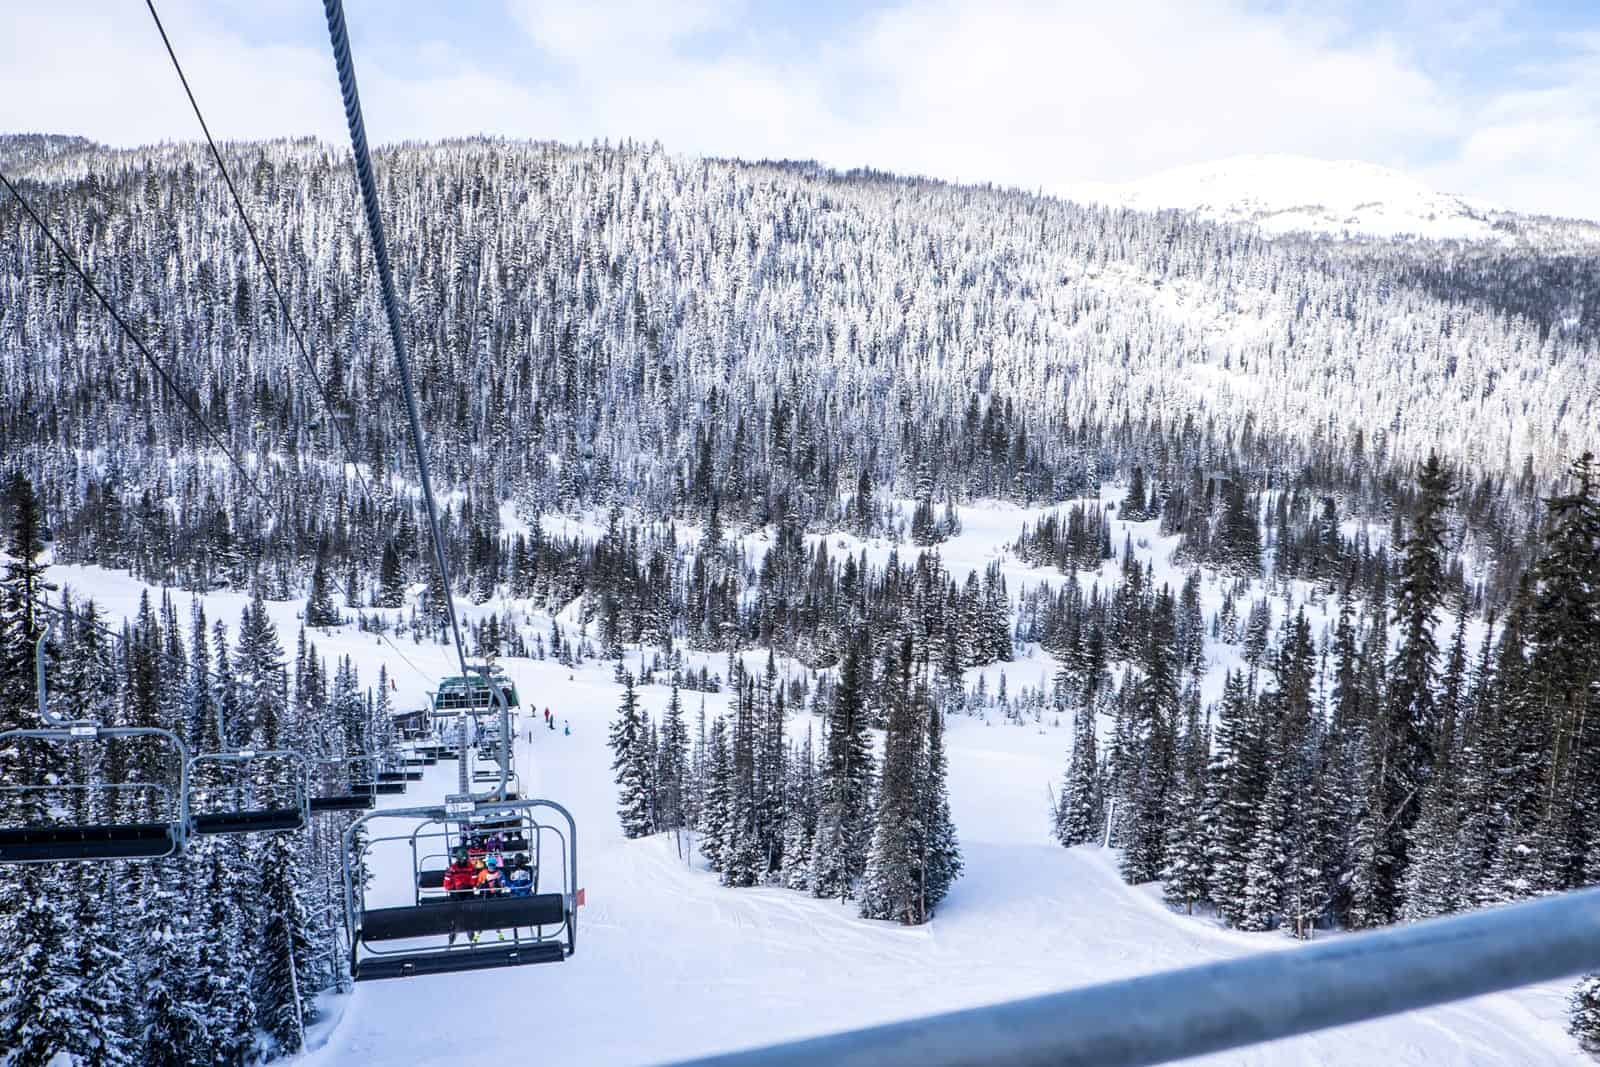 View from the gondola in winter at Sunshine Village Ski Resort in Banff